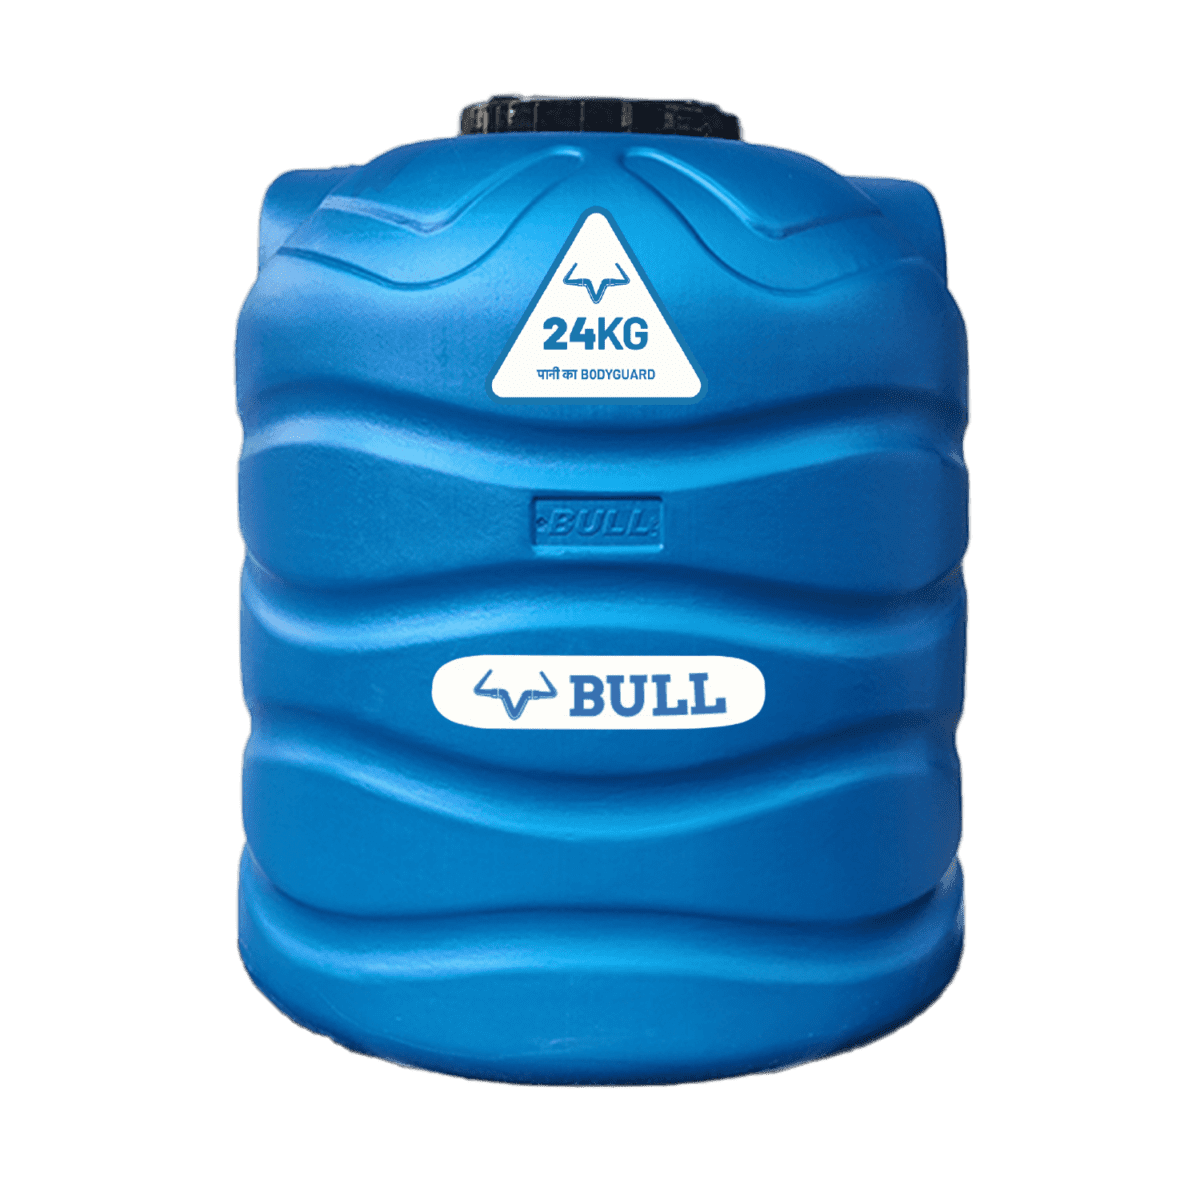 24kg Bull Fit Water Tanks, Blue